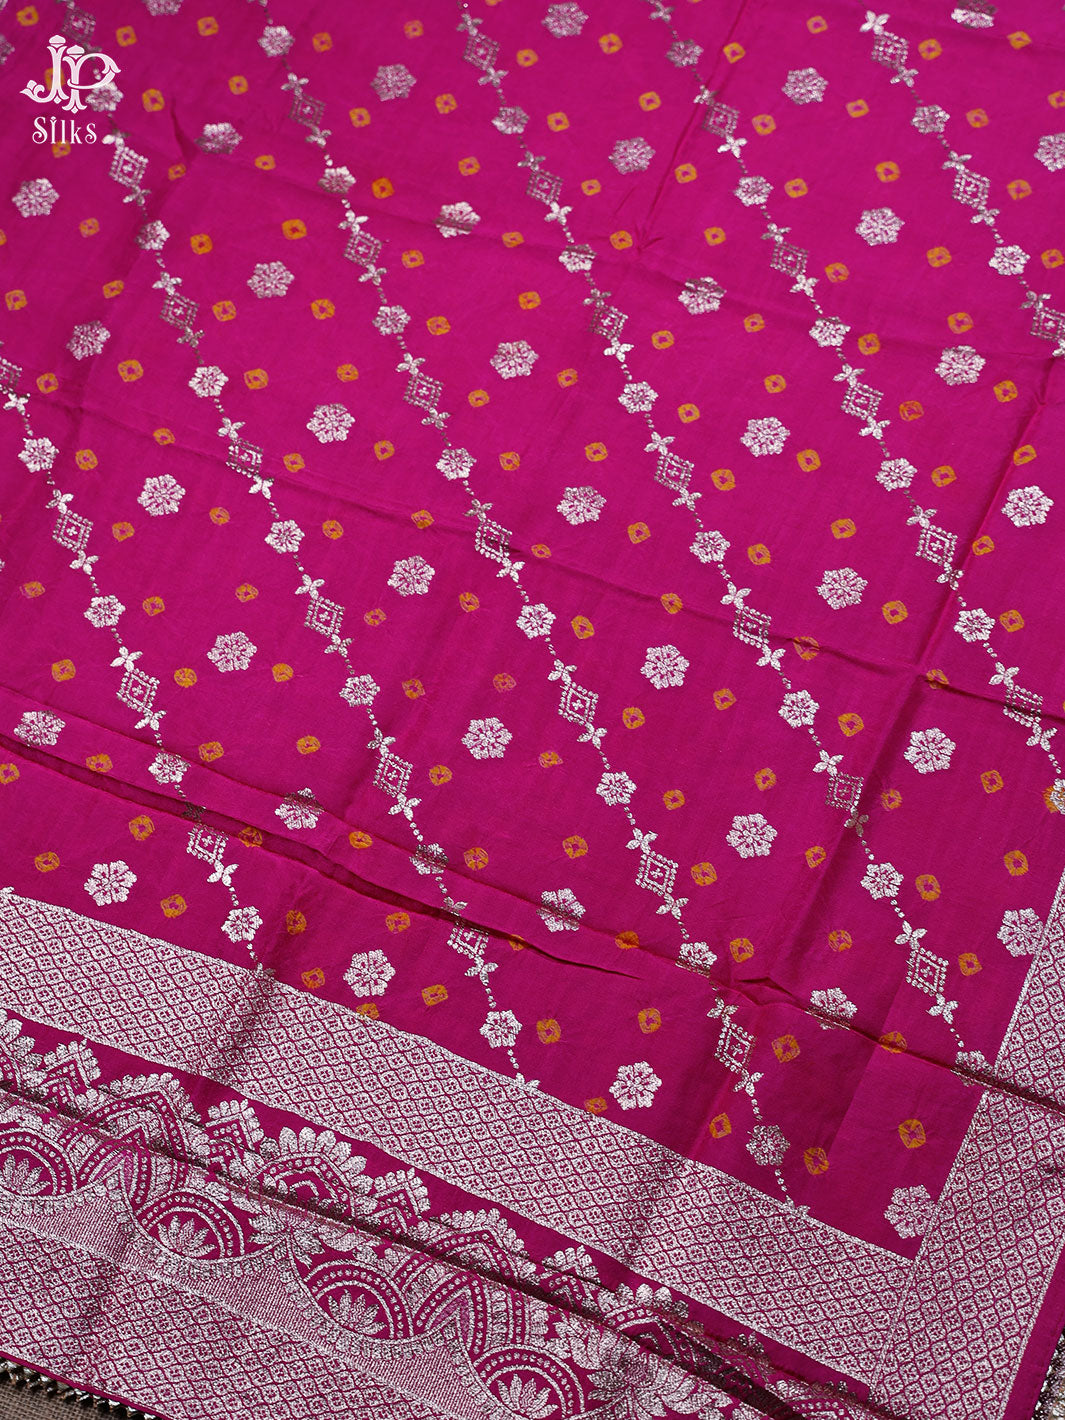 Rani Pink Banaras Chudidhar Material - E1940 - View 2